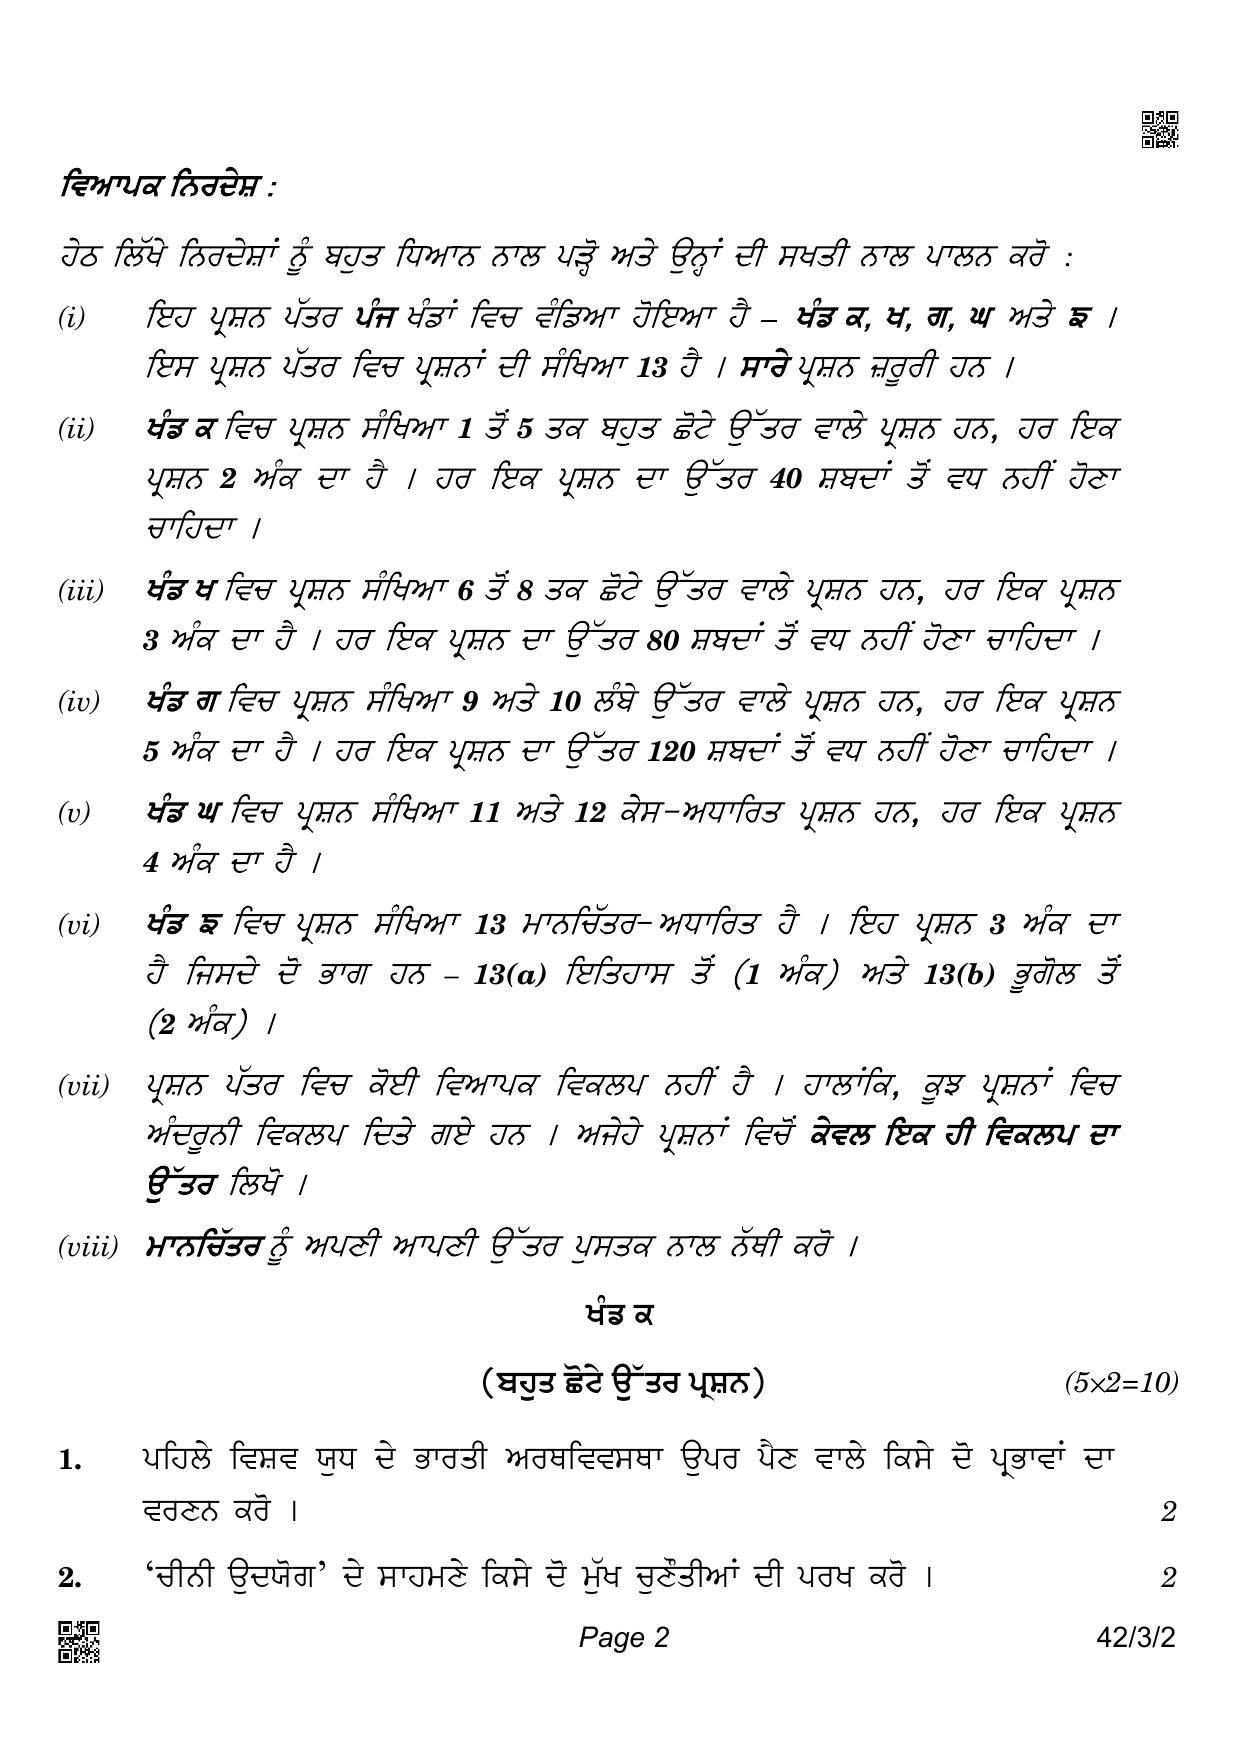 CBSE Class 10 42-3-2 Social Science Punjabi Version 2022 Question Paper - Page 2